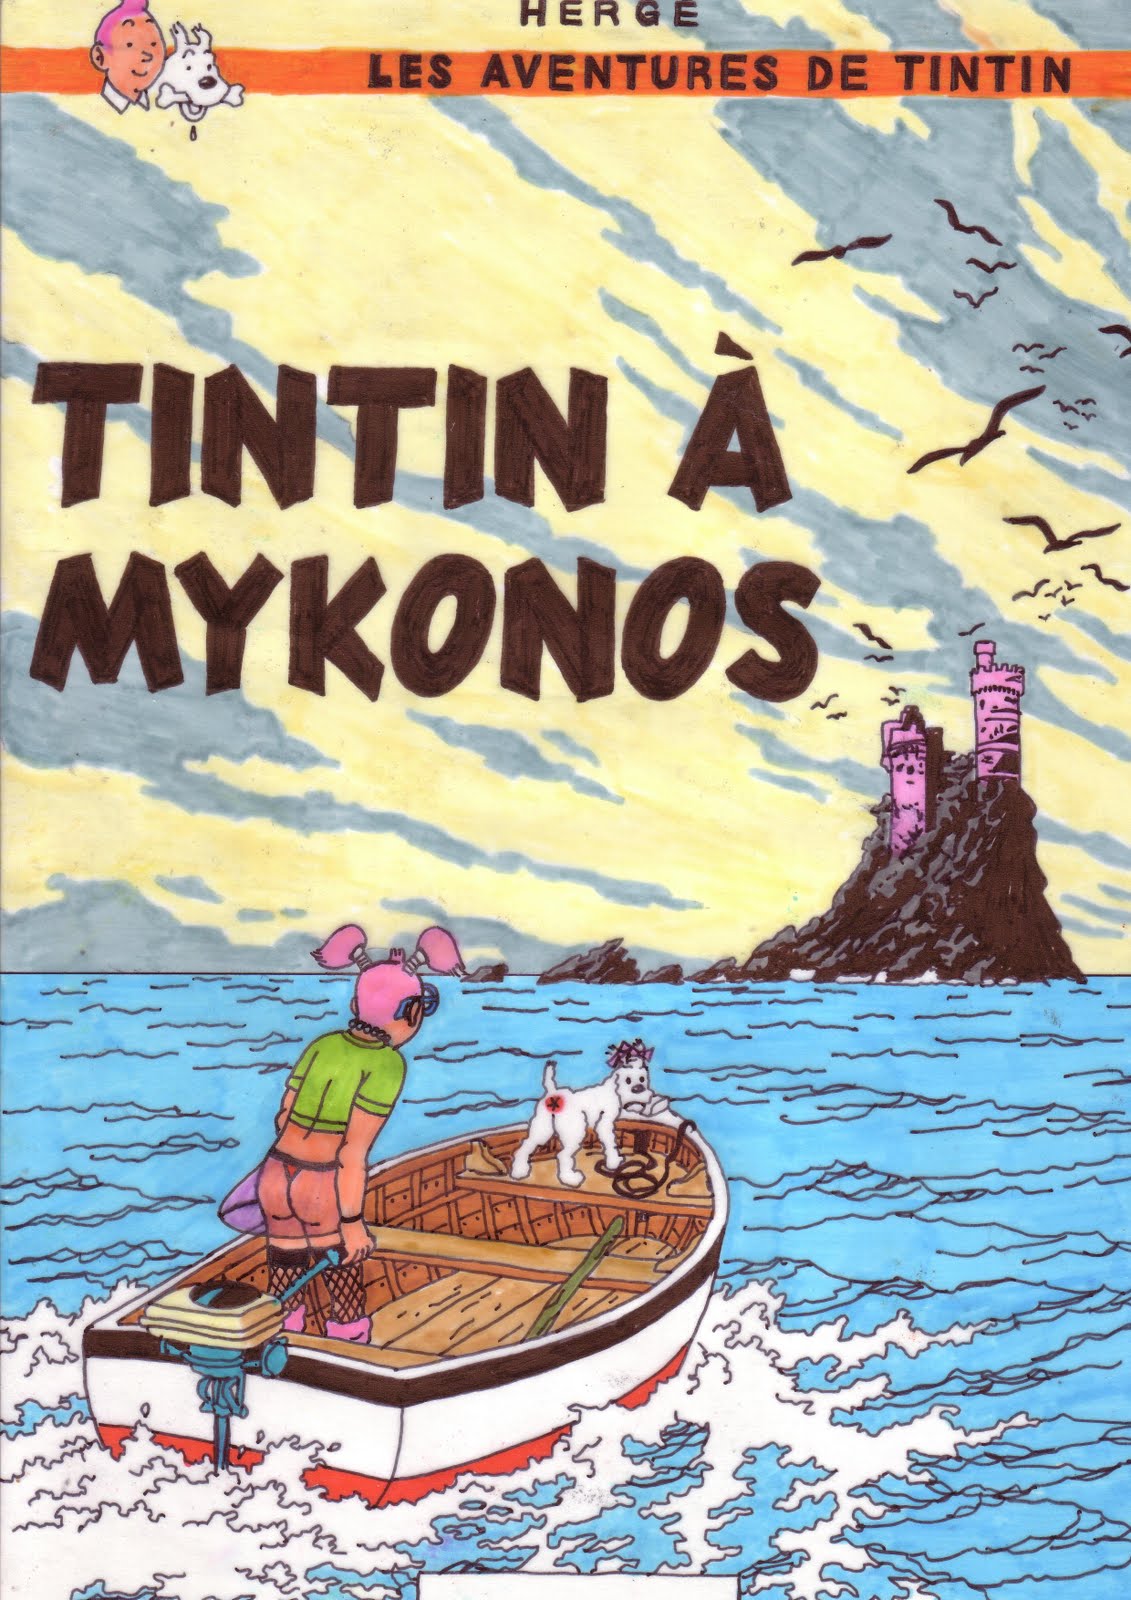 http://www.yves.brette.biz/public/parodies/Tintin_a_Mykonos_gay.JPG